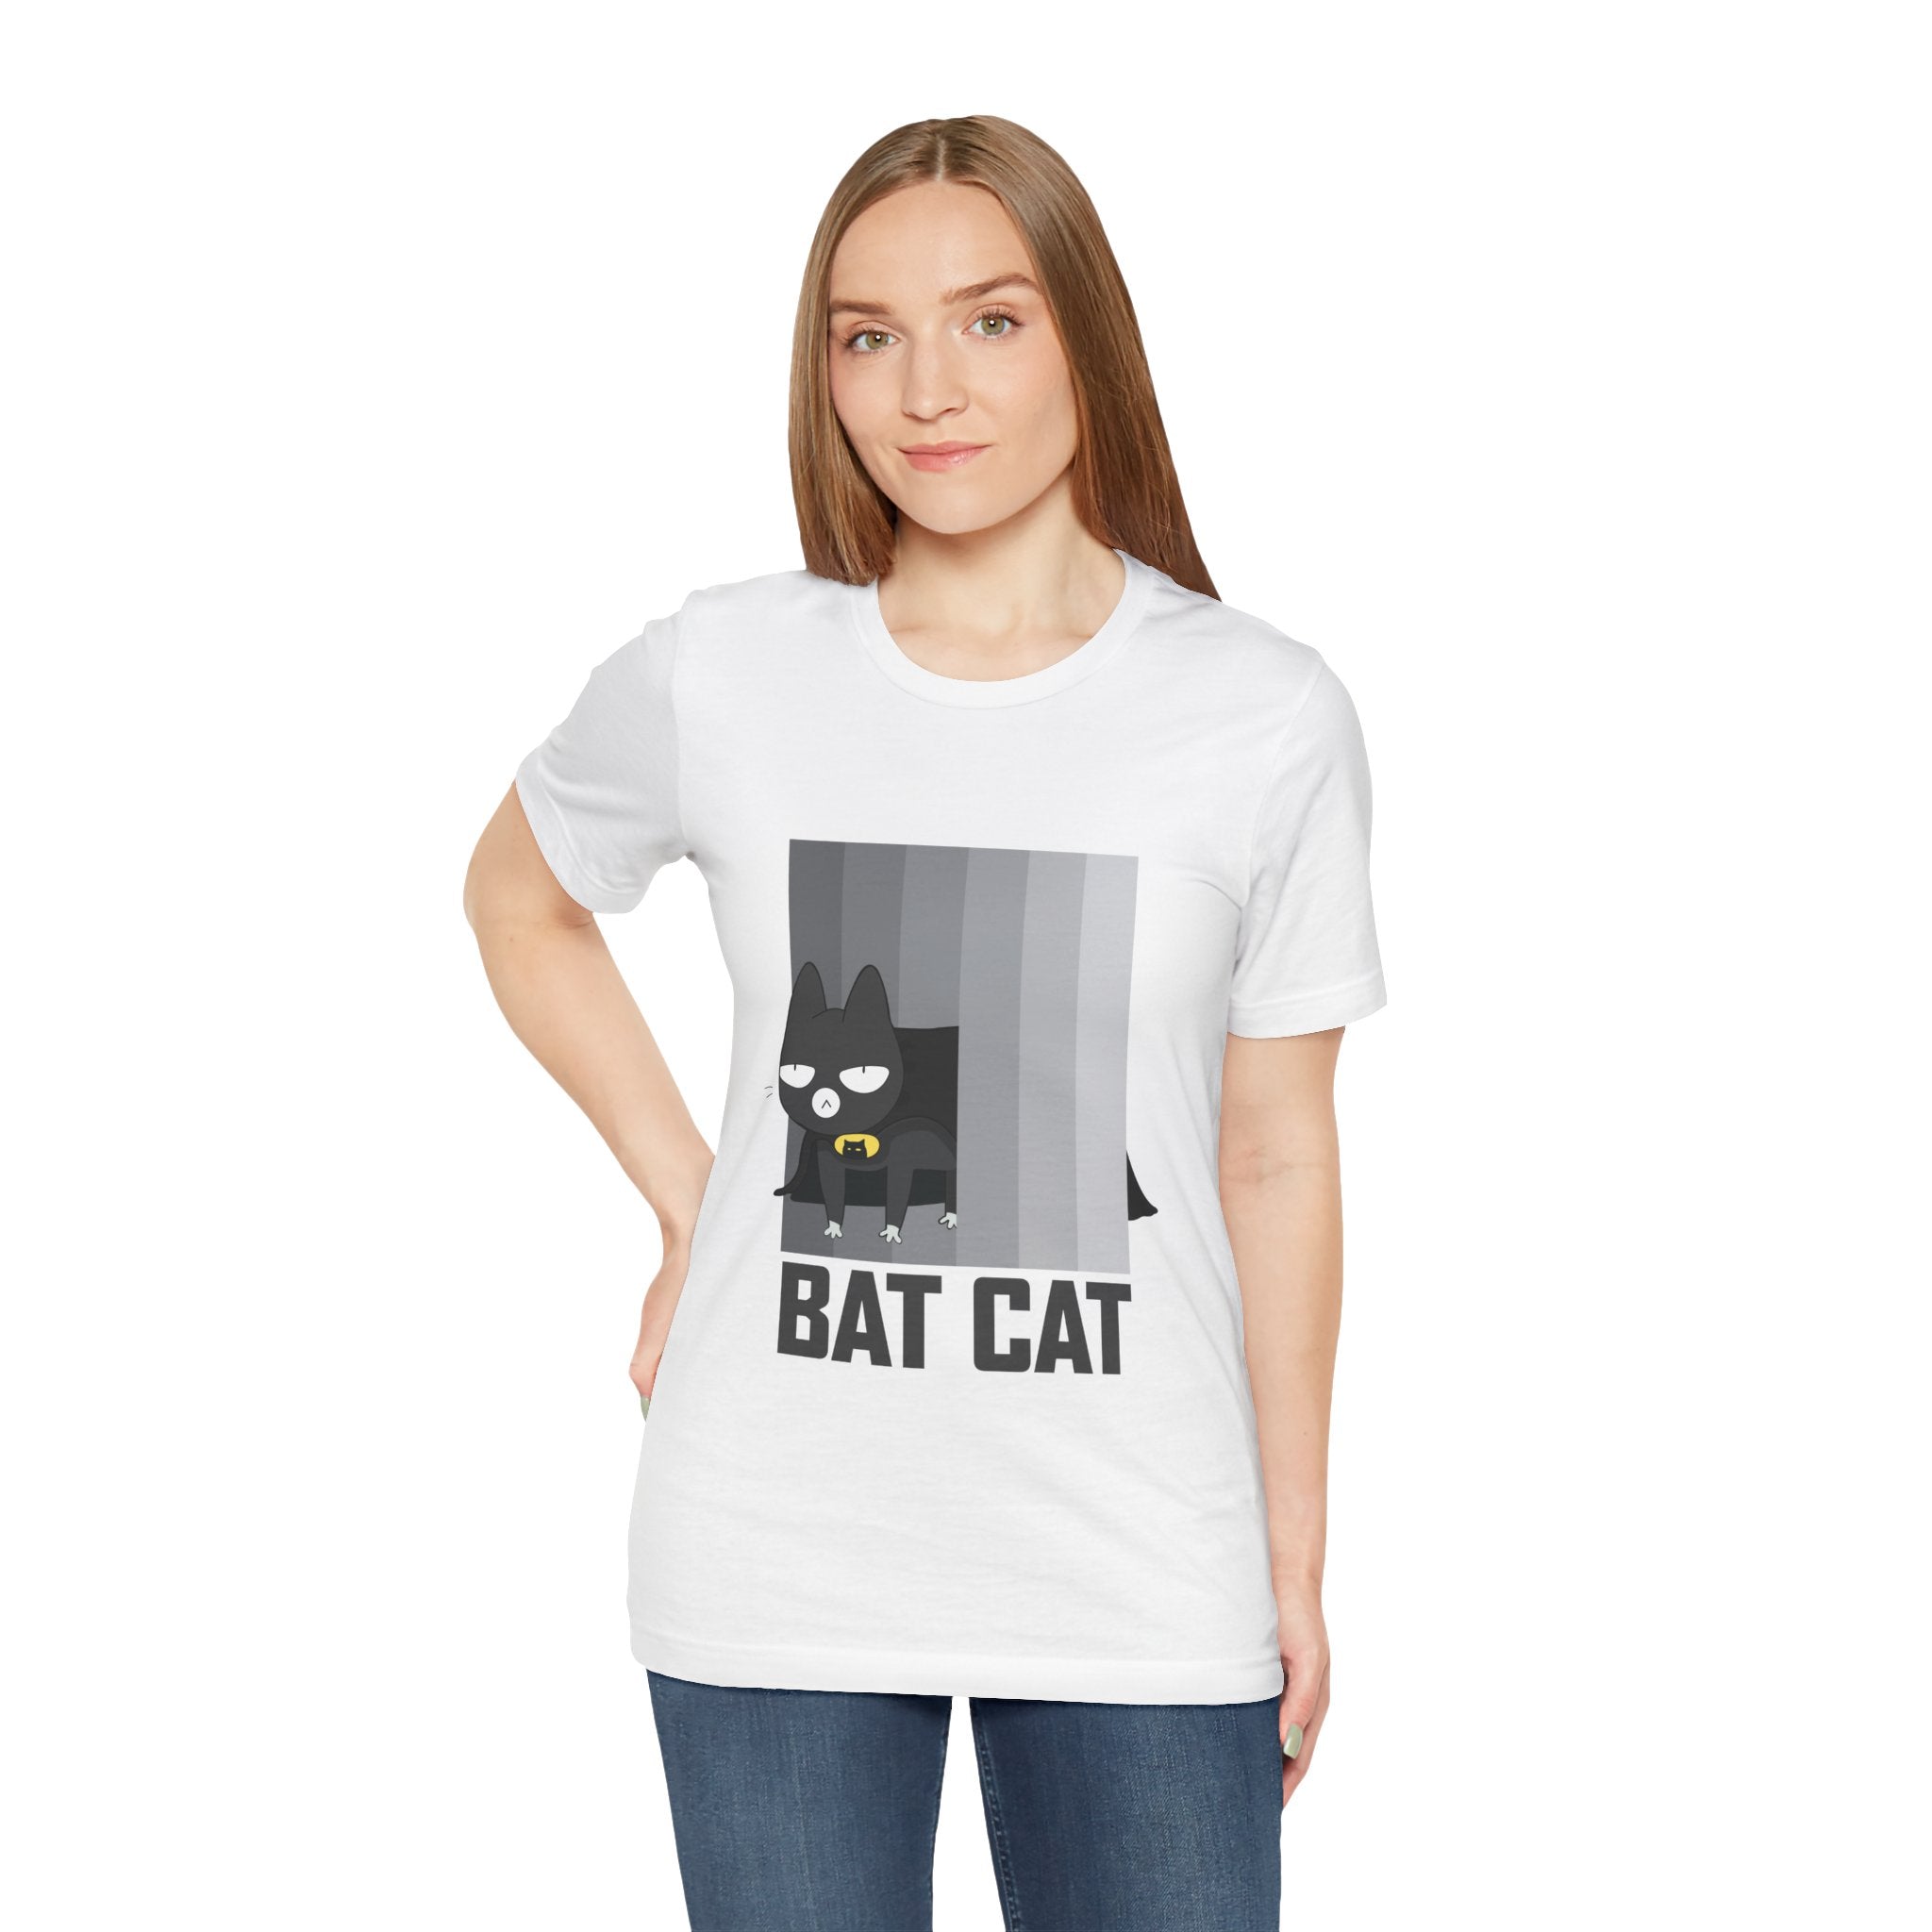 Woman in a white BATCAT T-Shirt featuring a cartoon "Batcat" design.